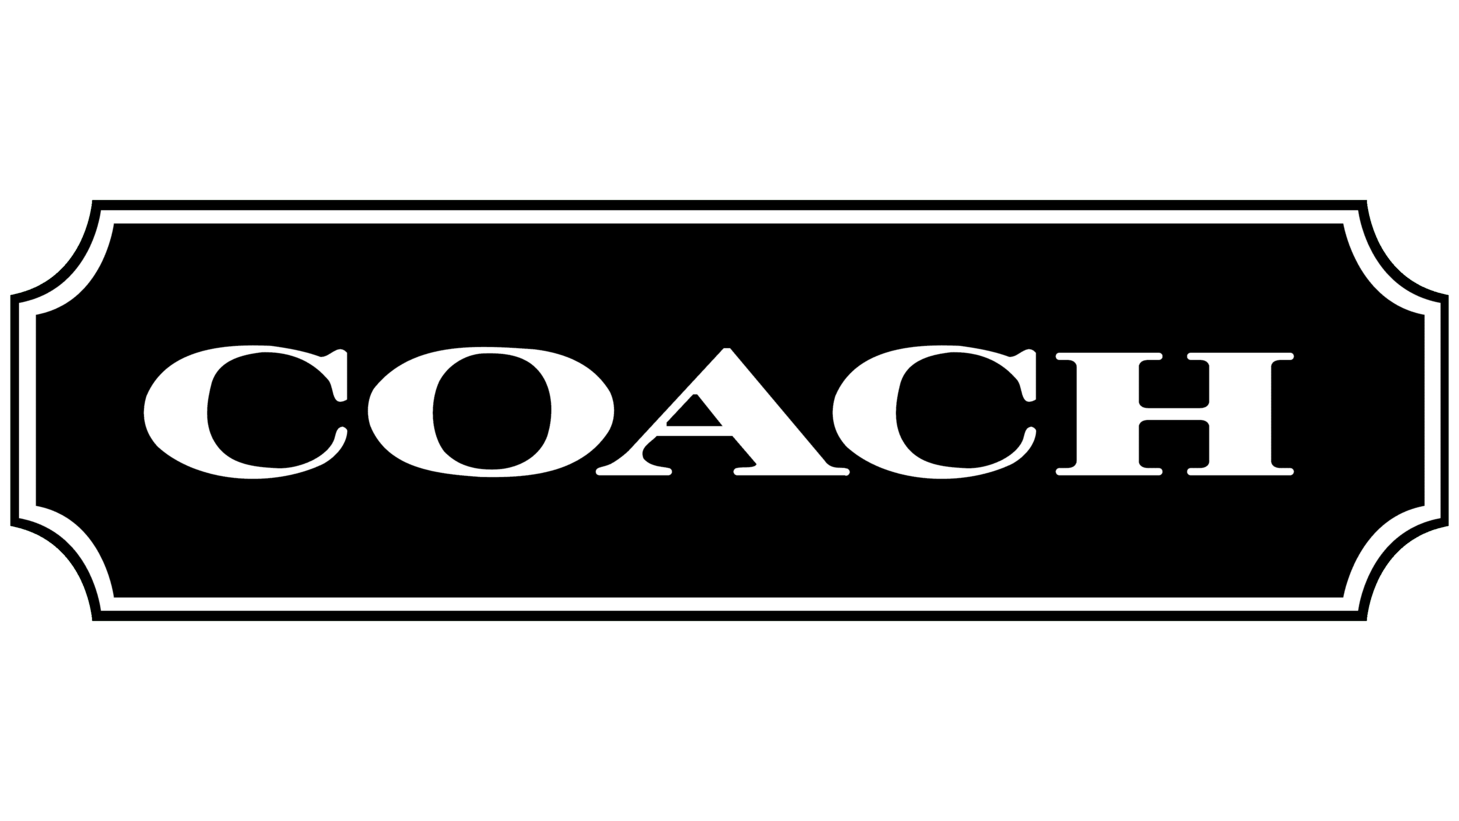 Coach symbol